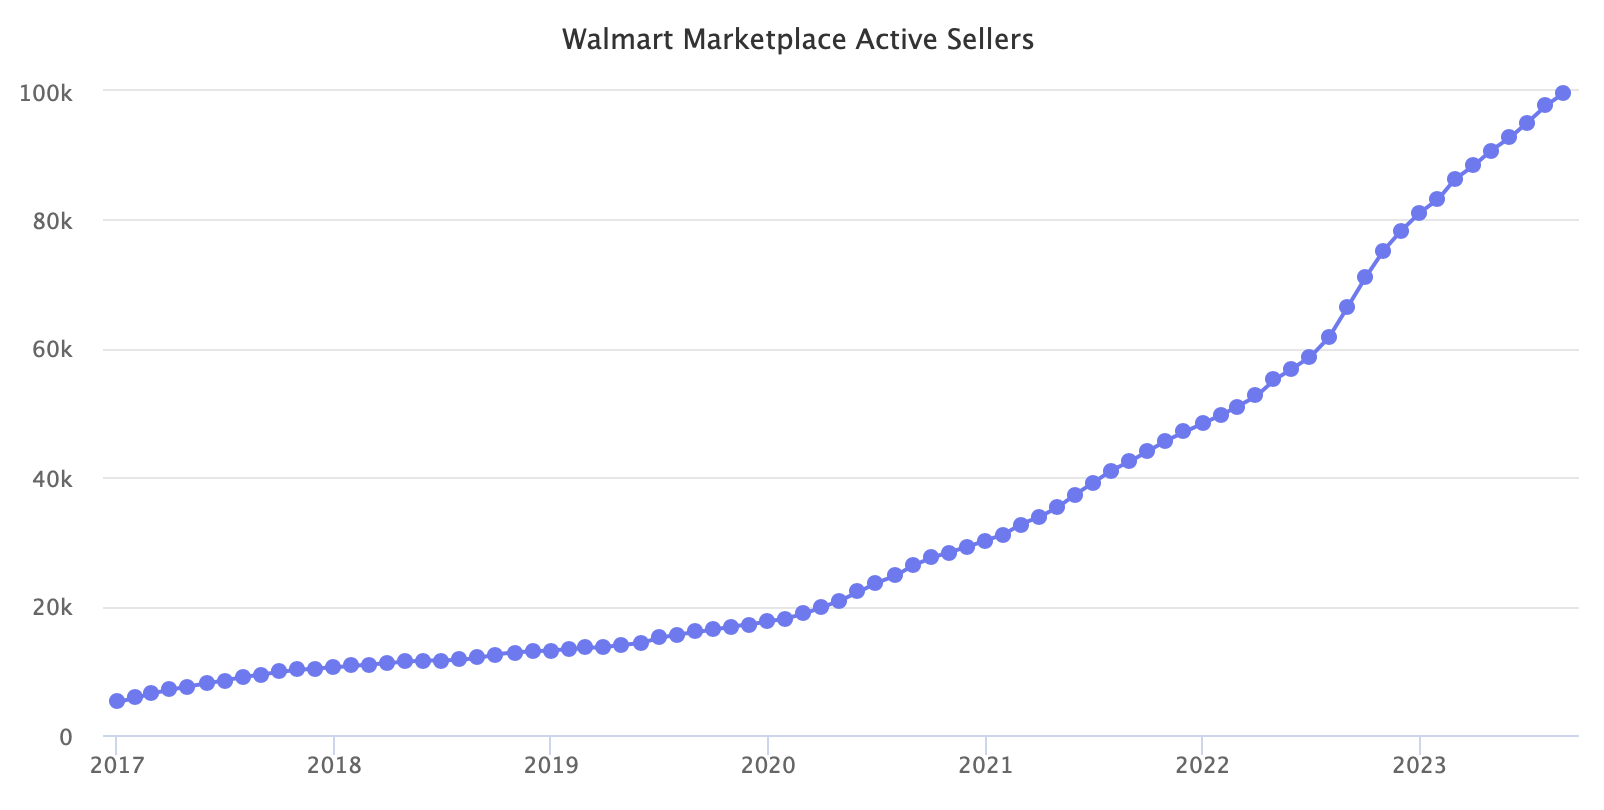 Walmart Marketplace Active Sellers